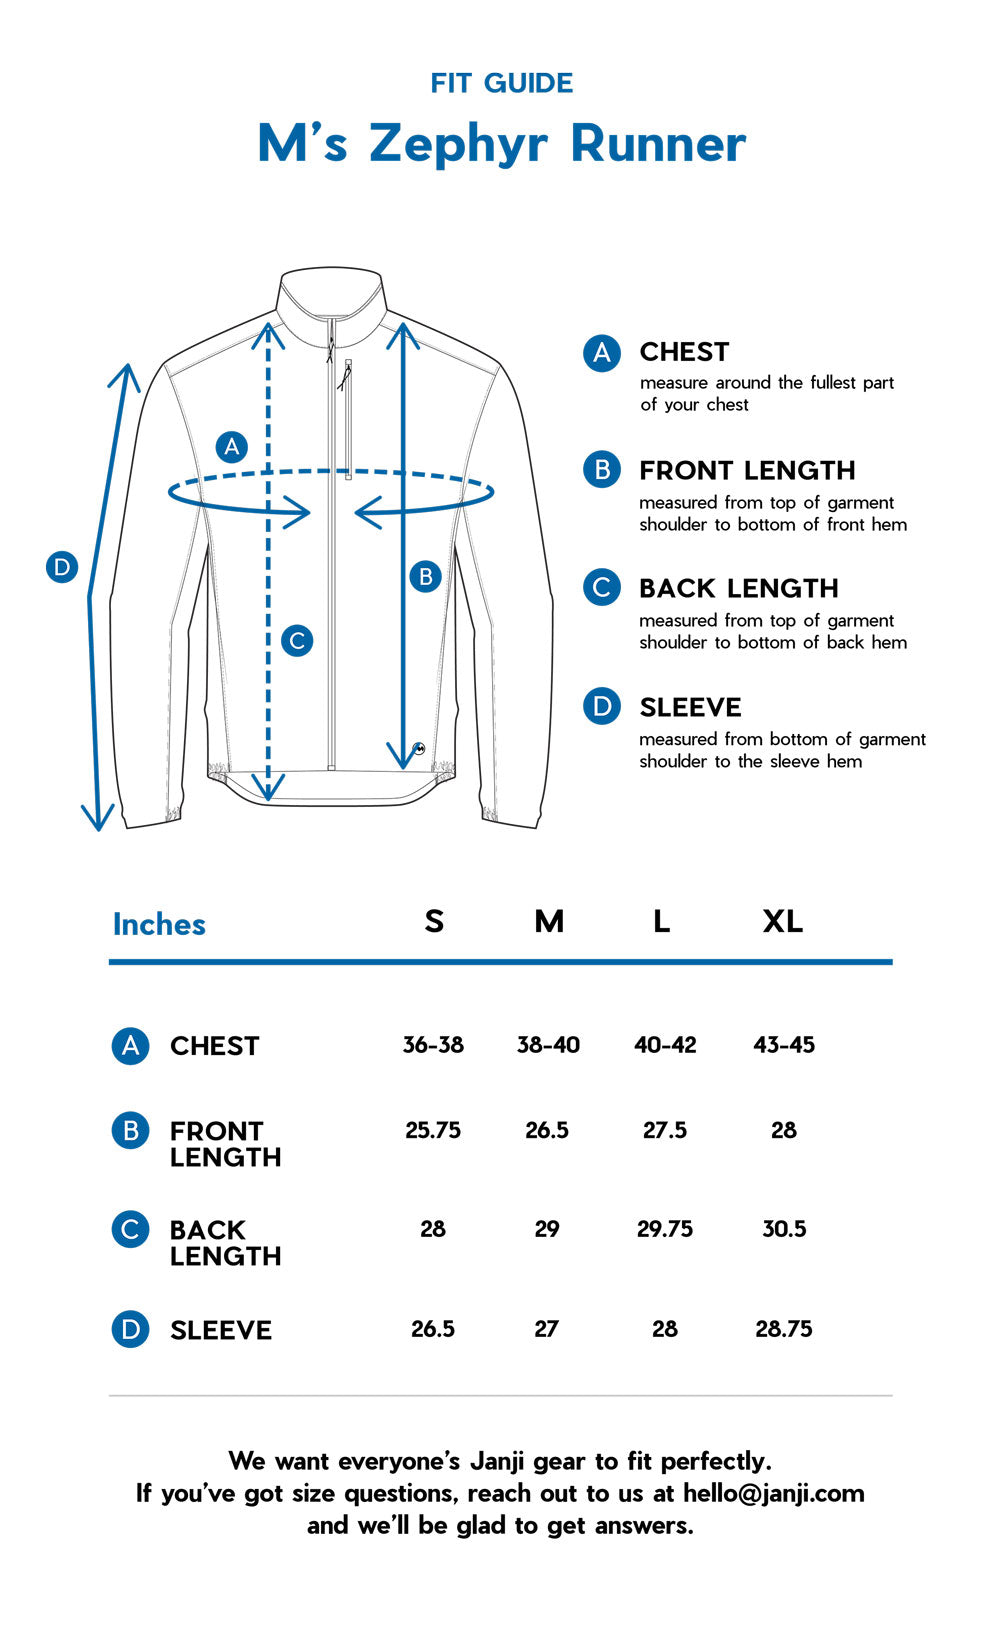 M's Zephyr Runner Jacket size guide